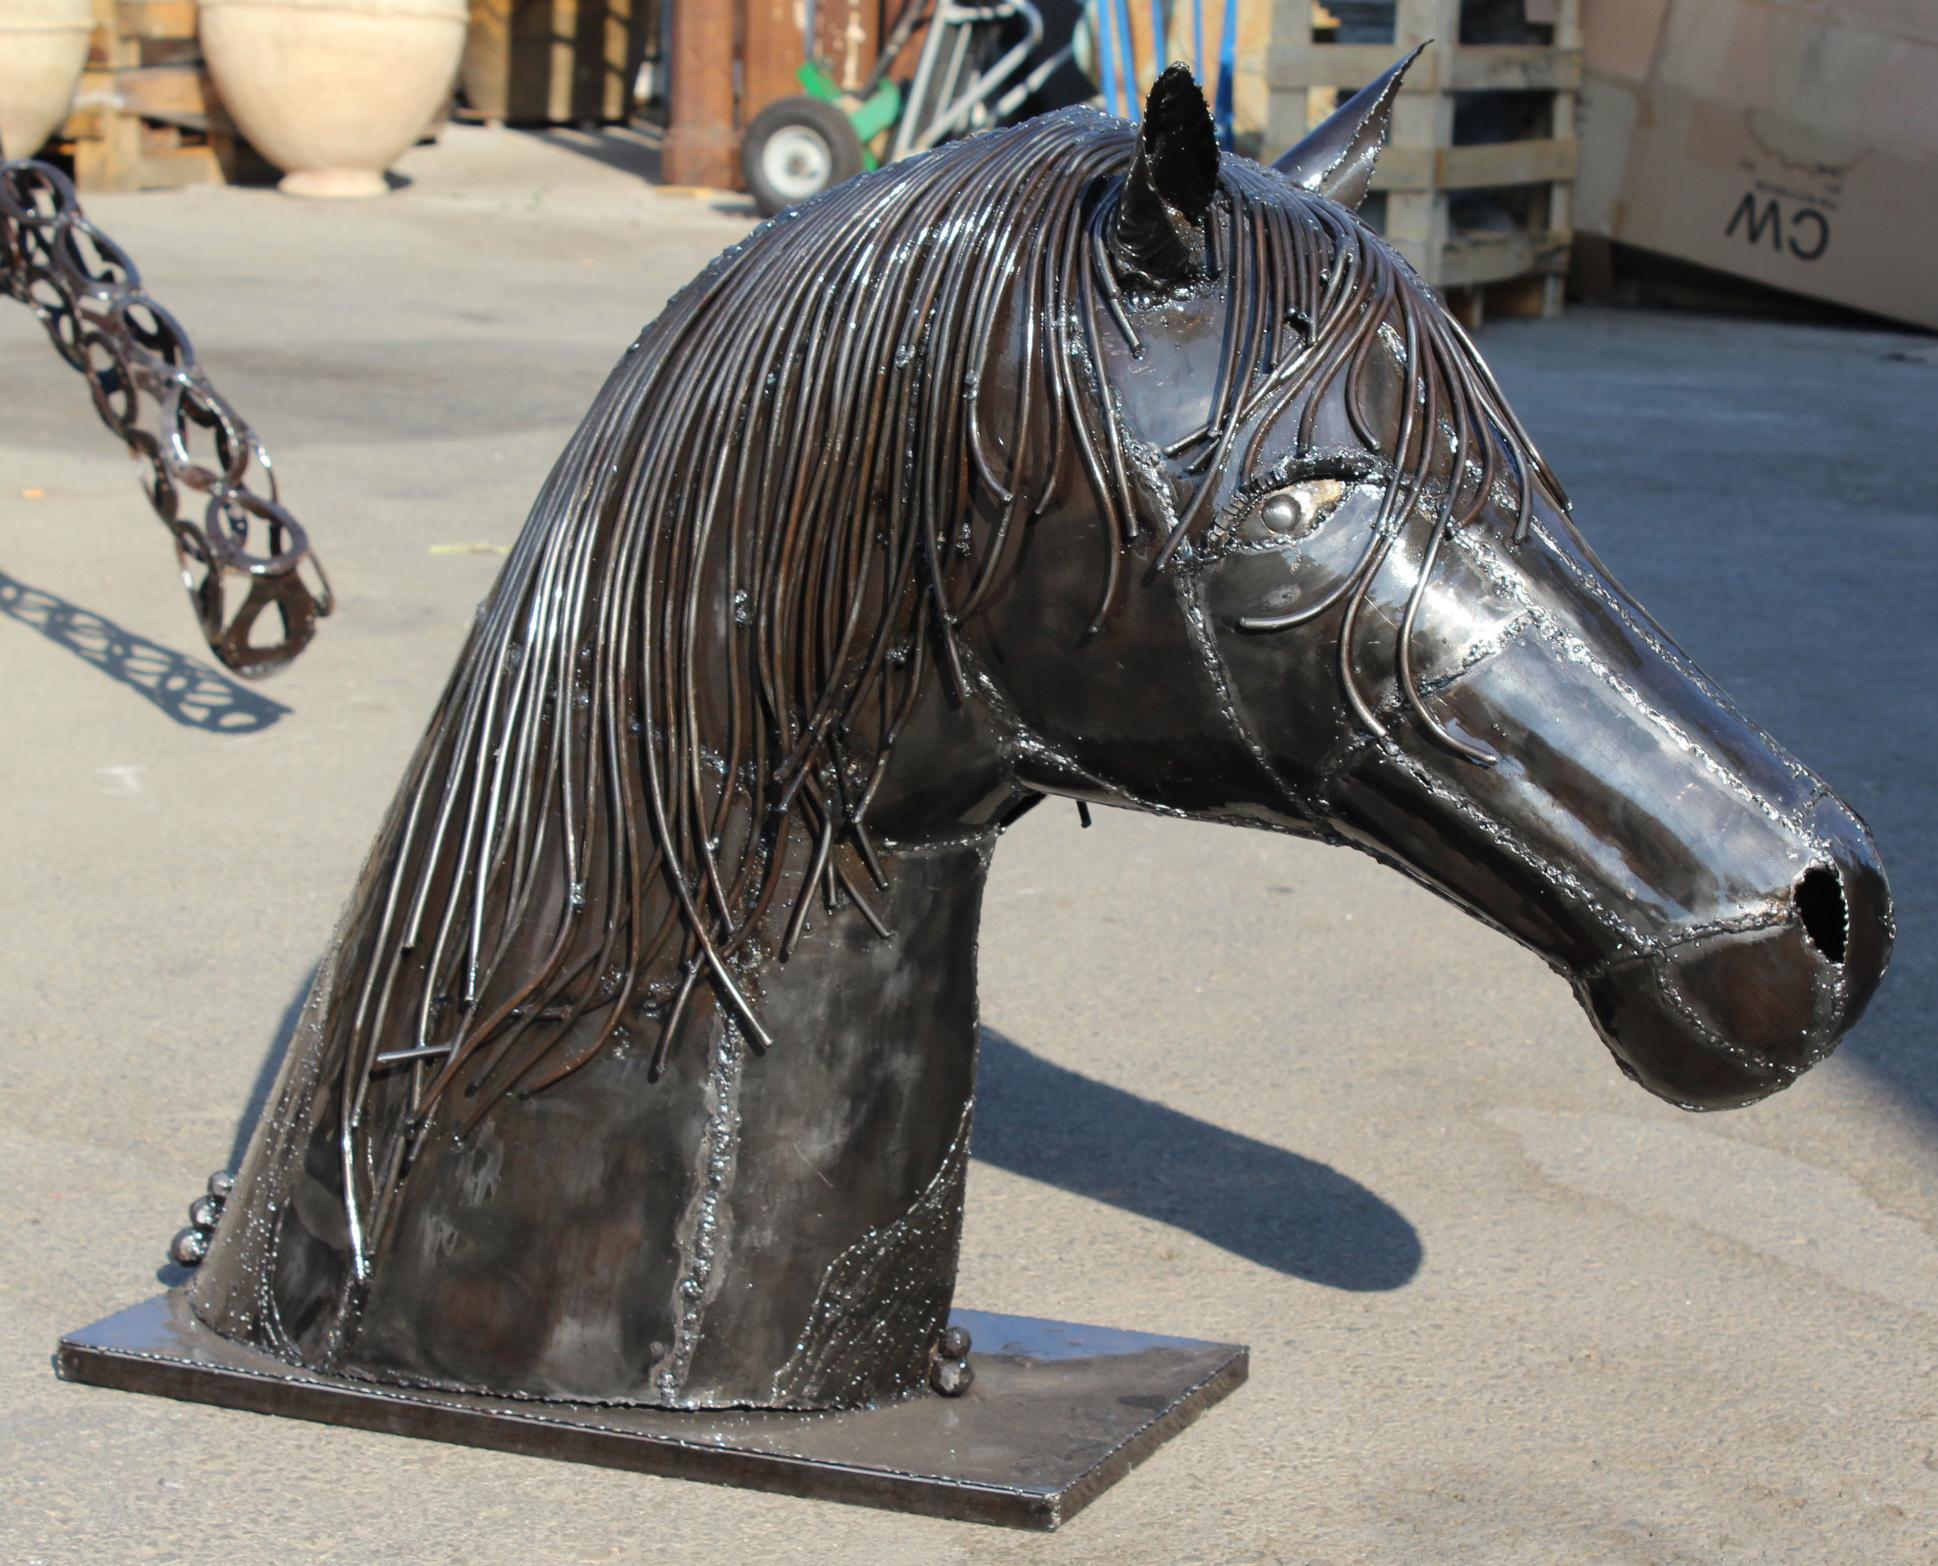 Handcrafted polished iron horse head with a polished shiny finish.